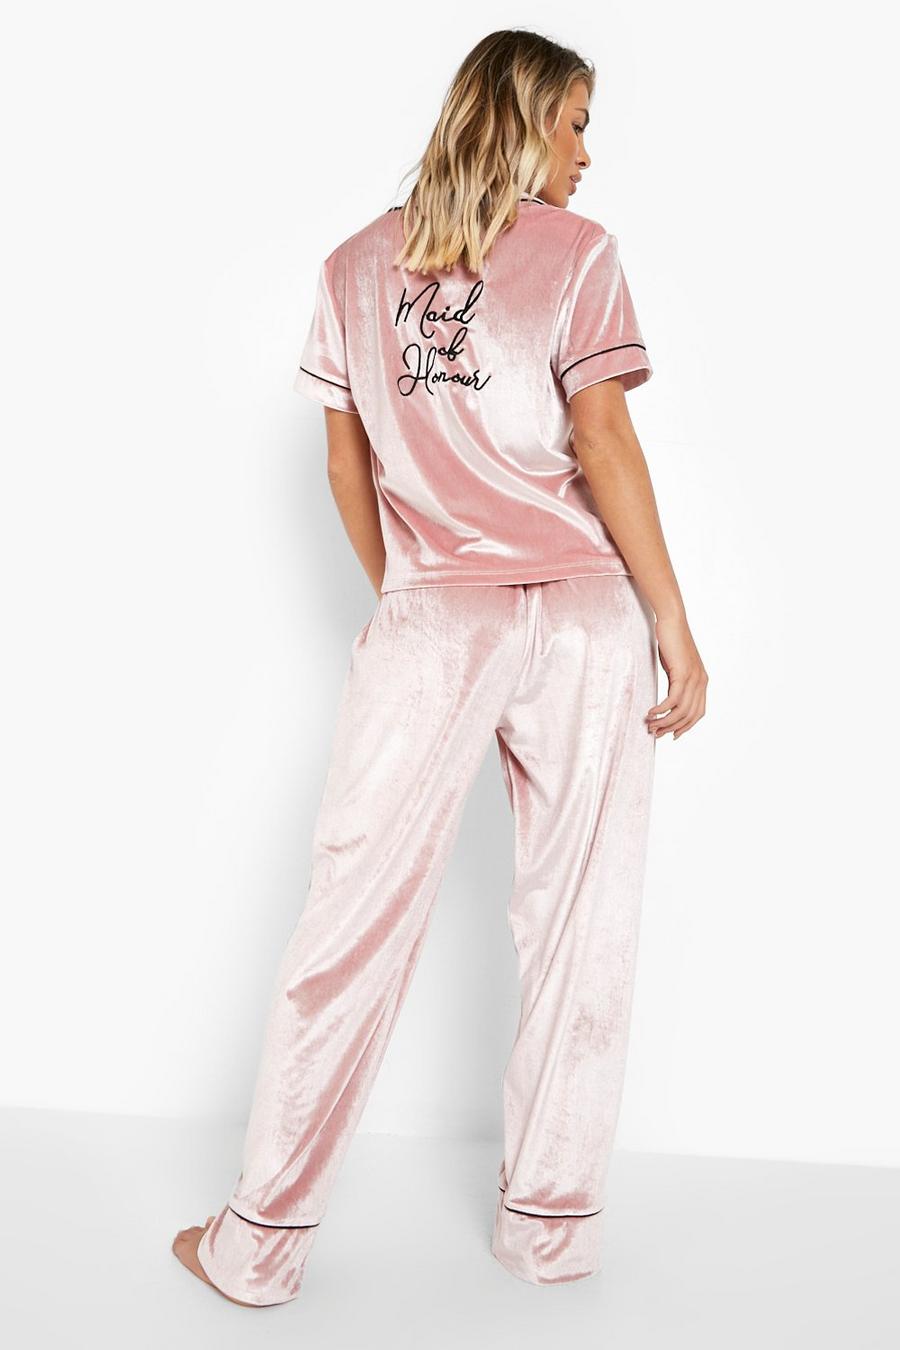 Pijama de terciopelo con bordado Maid Of Honour, Blush pink